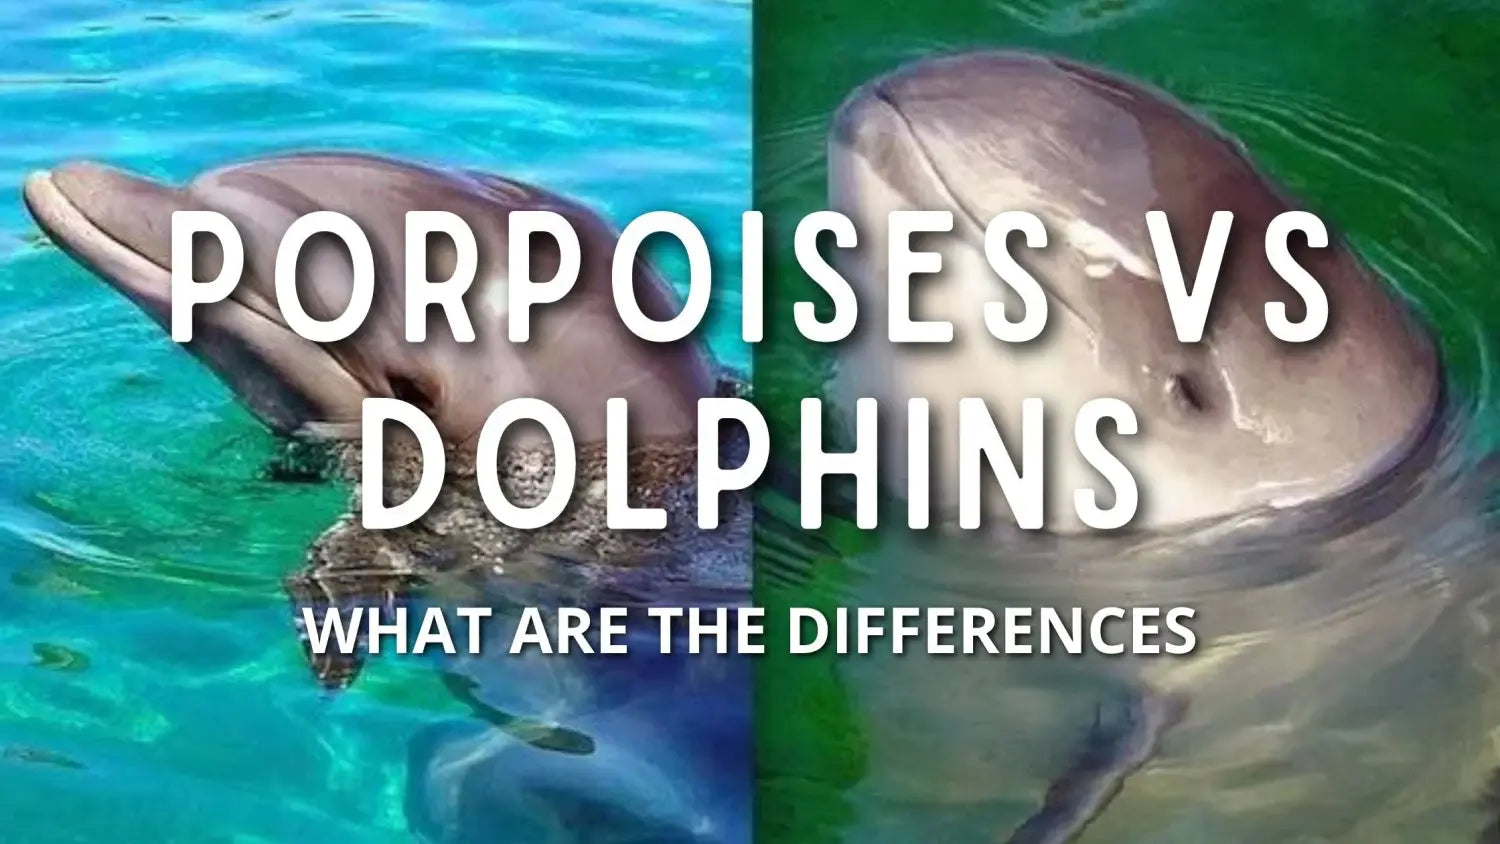 porpoises-vs-dolphins-differences